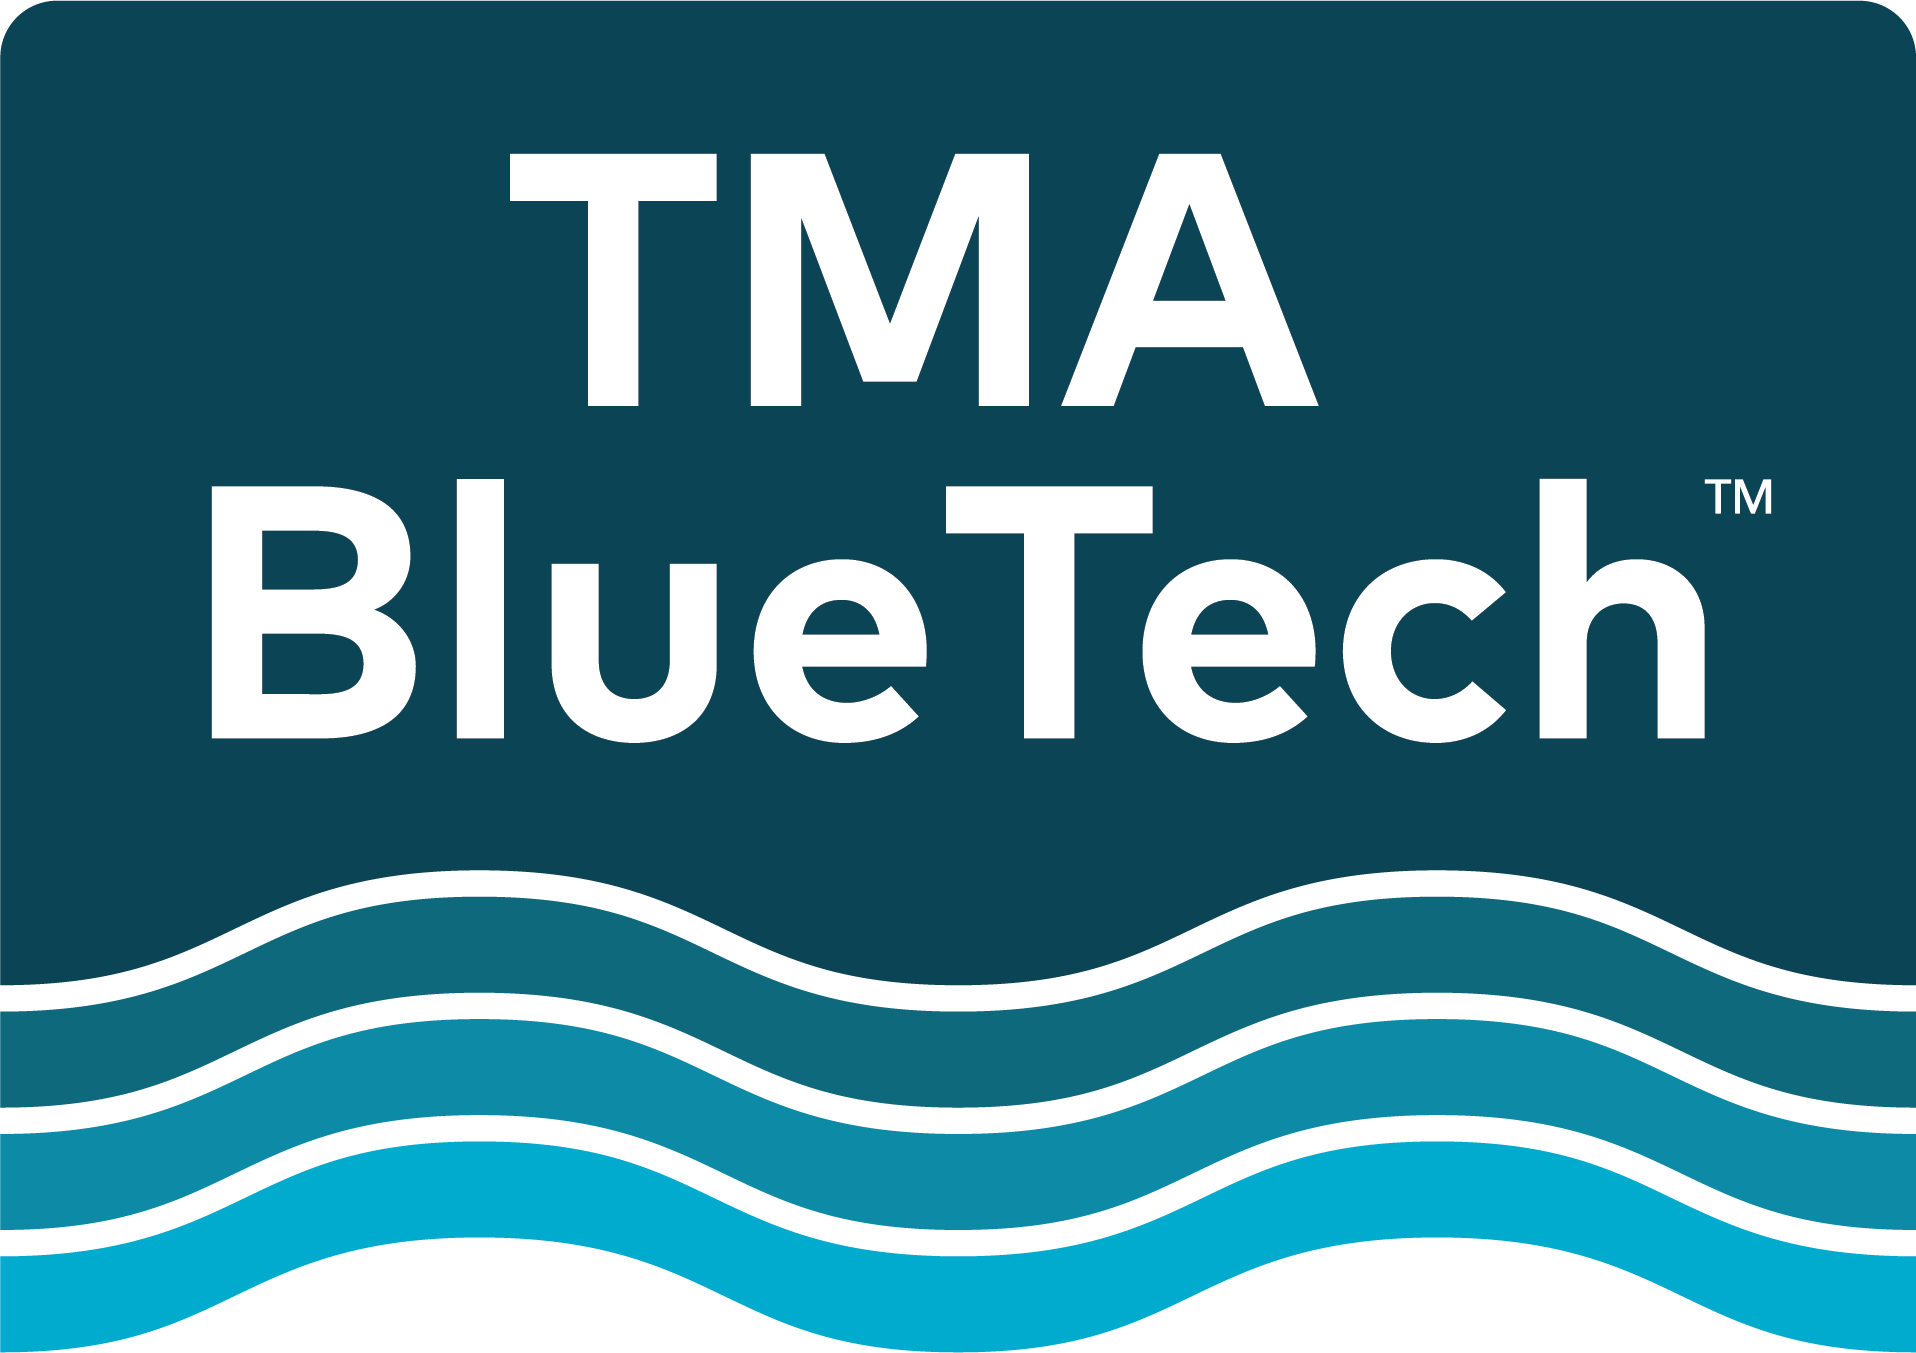 TMA BlueTech logo without tagline.png